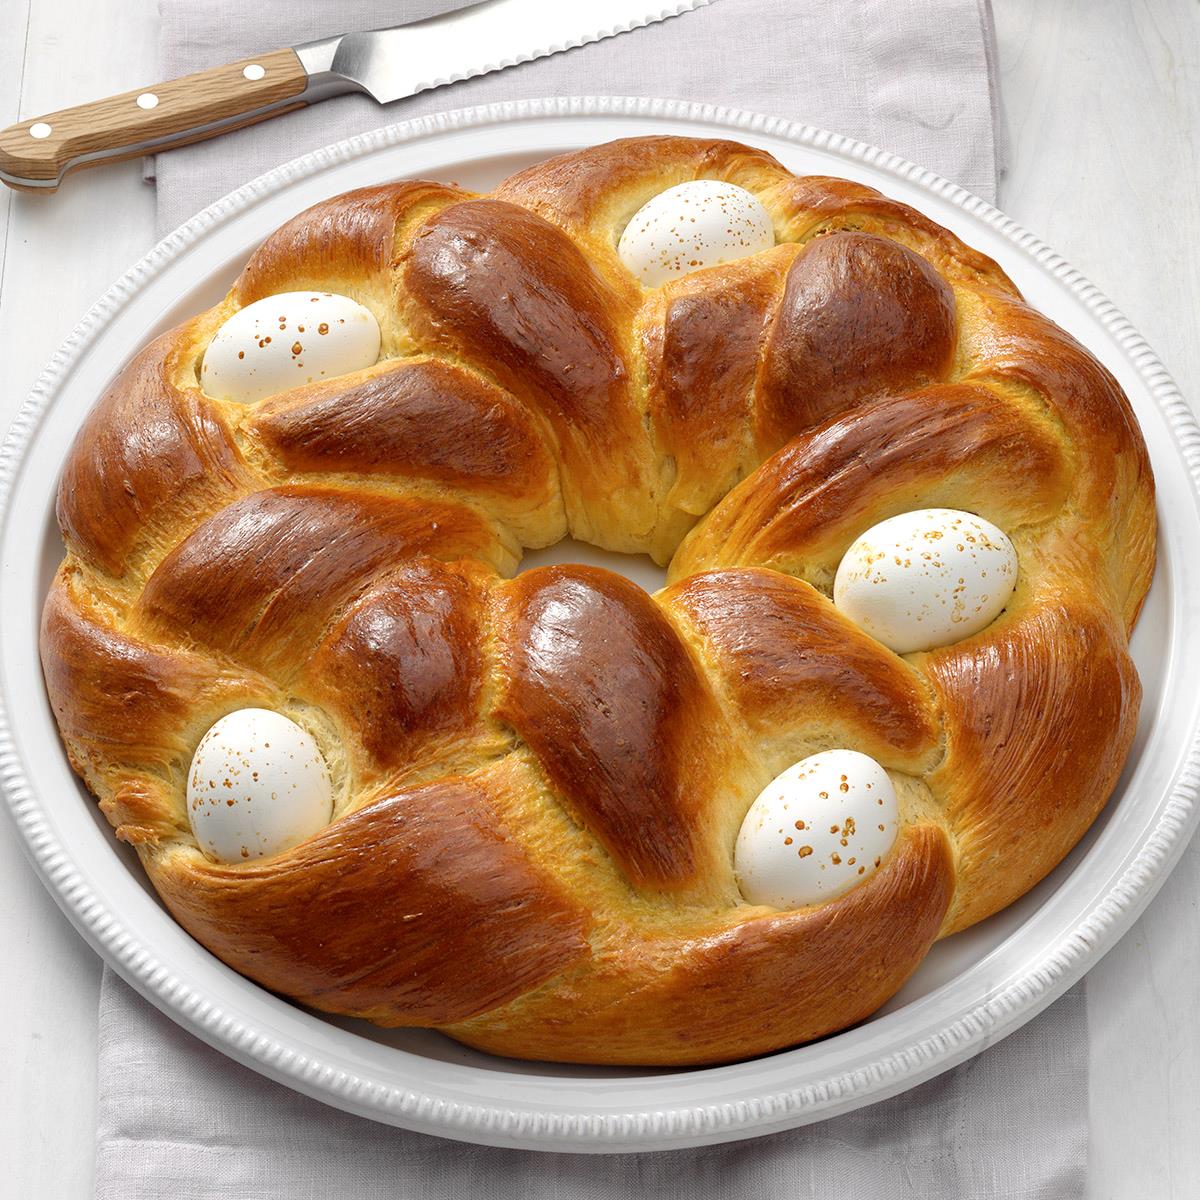 Easter Egg Bread image